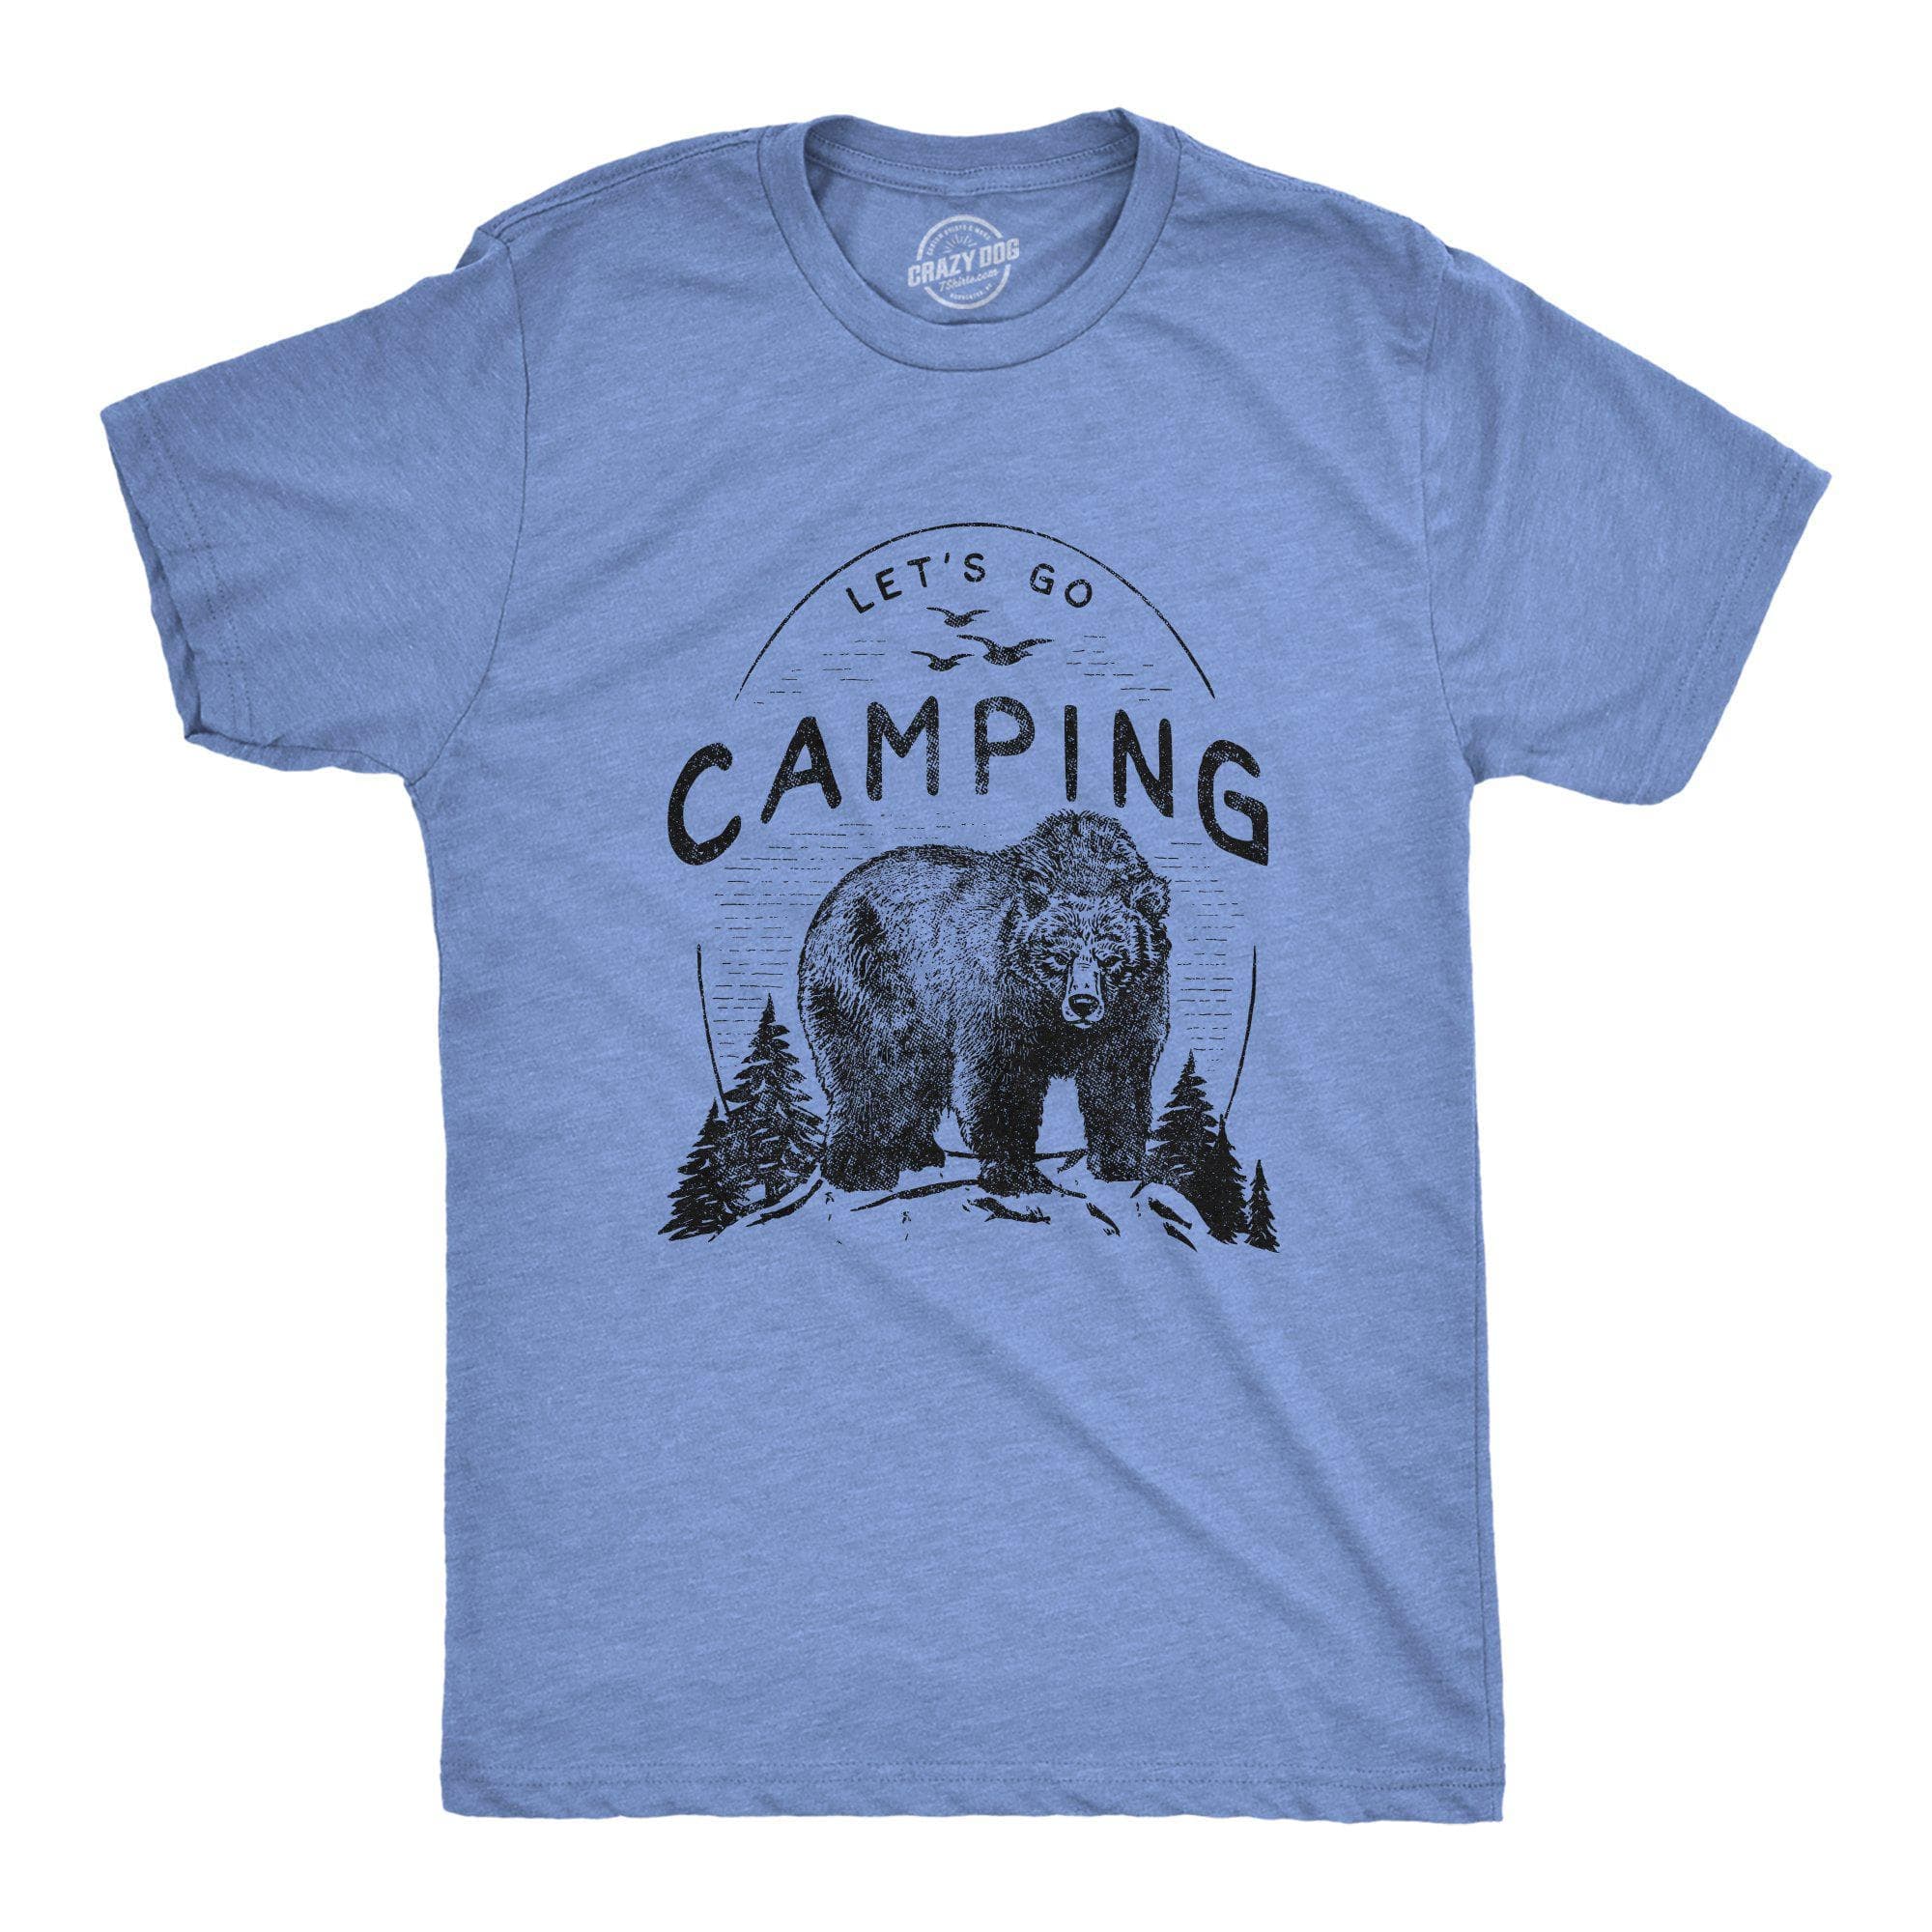 Let's Go Camping Men's Tshirt - Crazy Dog T-Shirts